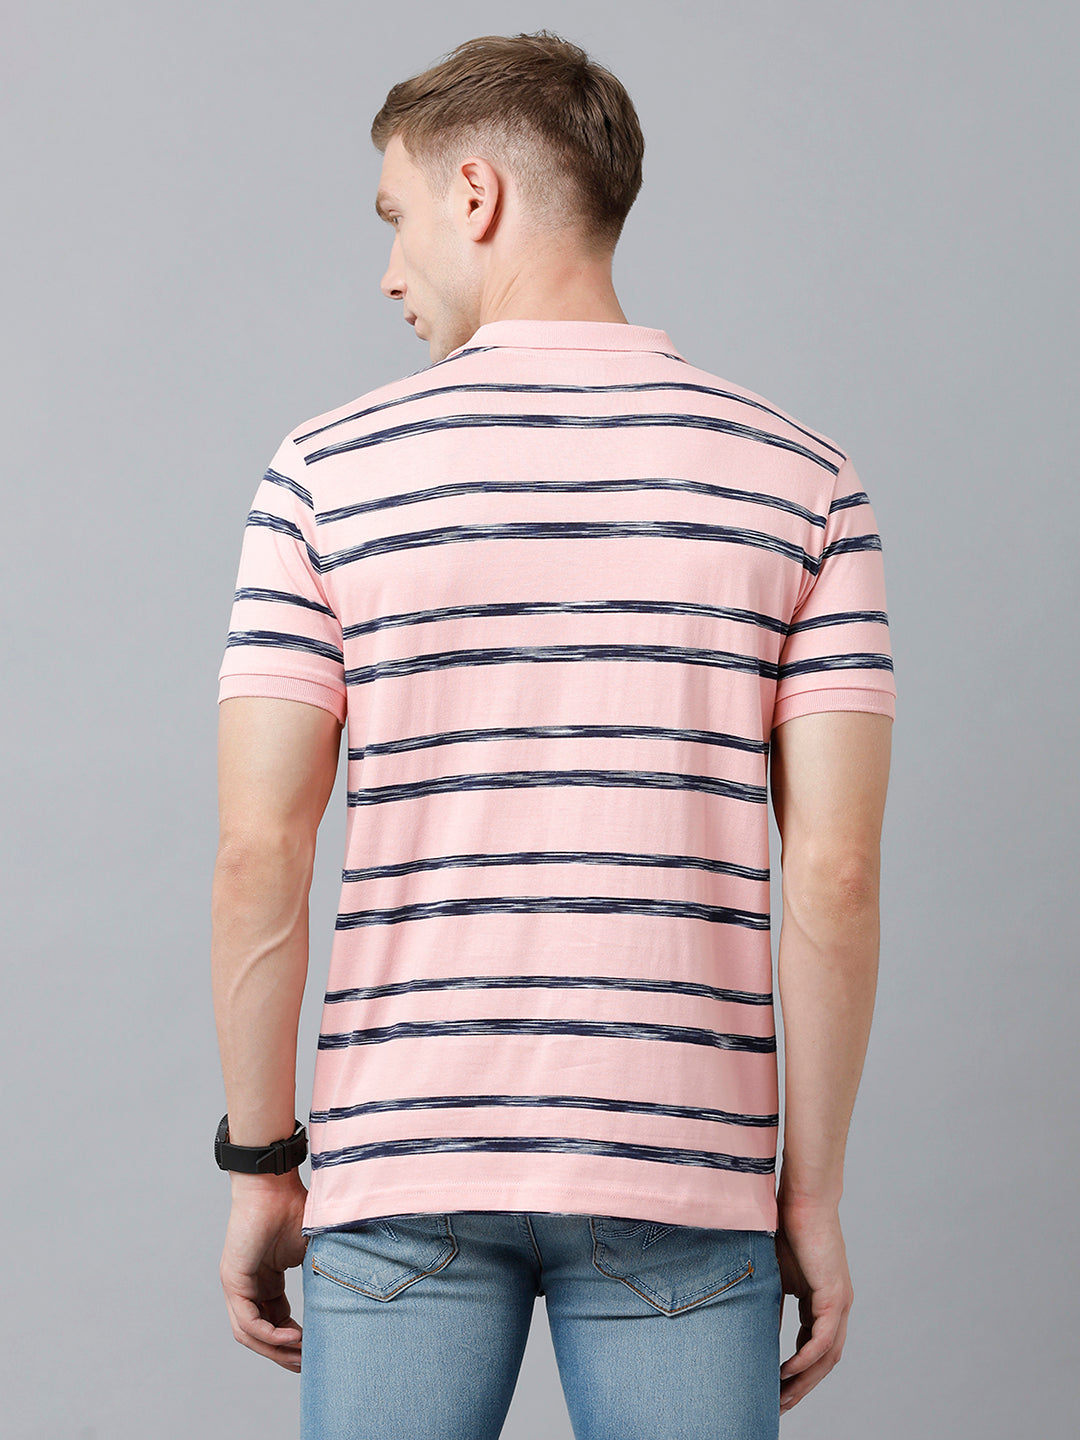 Classic Polo Men's Cotton Half Sleeve Striped Authentic Fit Polo Neck Pink Color T-Shirt | Nexon - 03 A